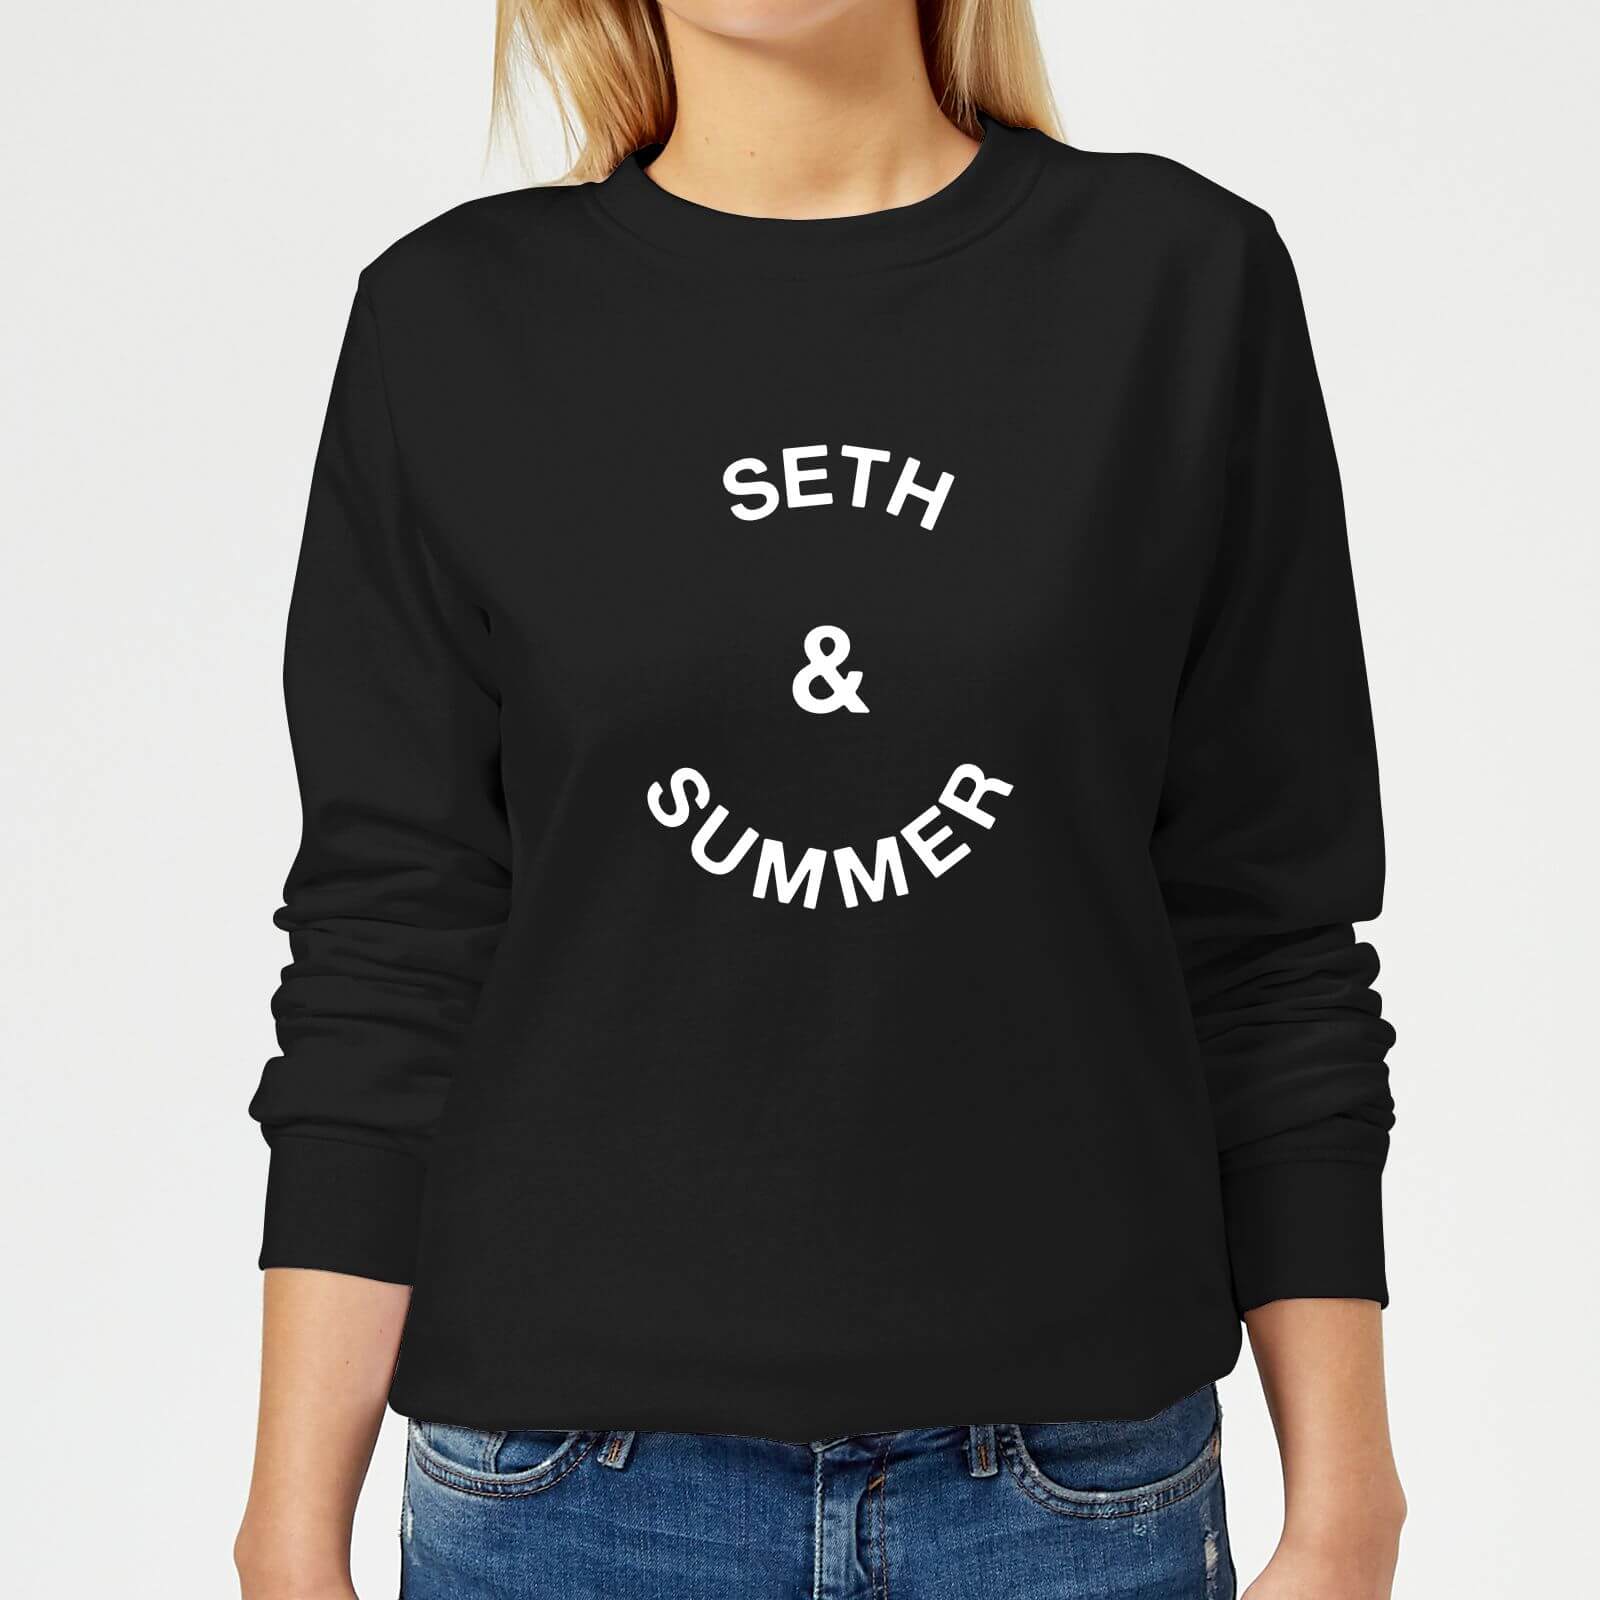 Seth & Summer Women's Sweatshirt - Black - M - Black